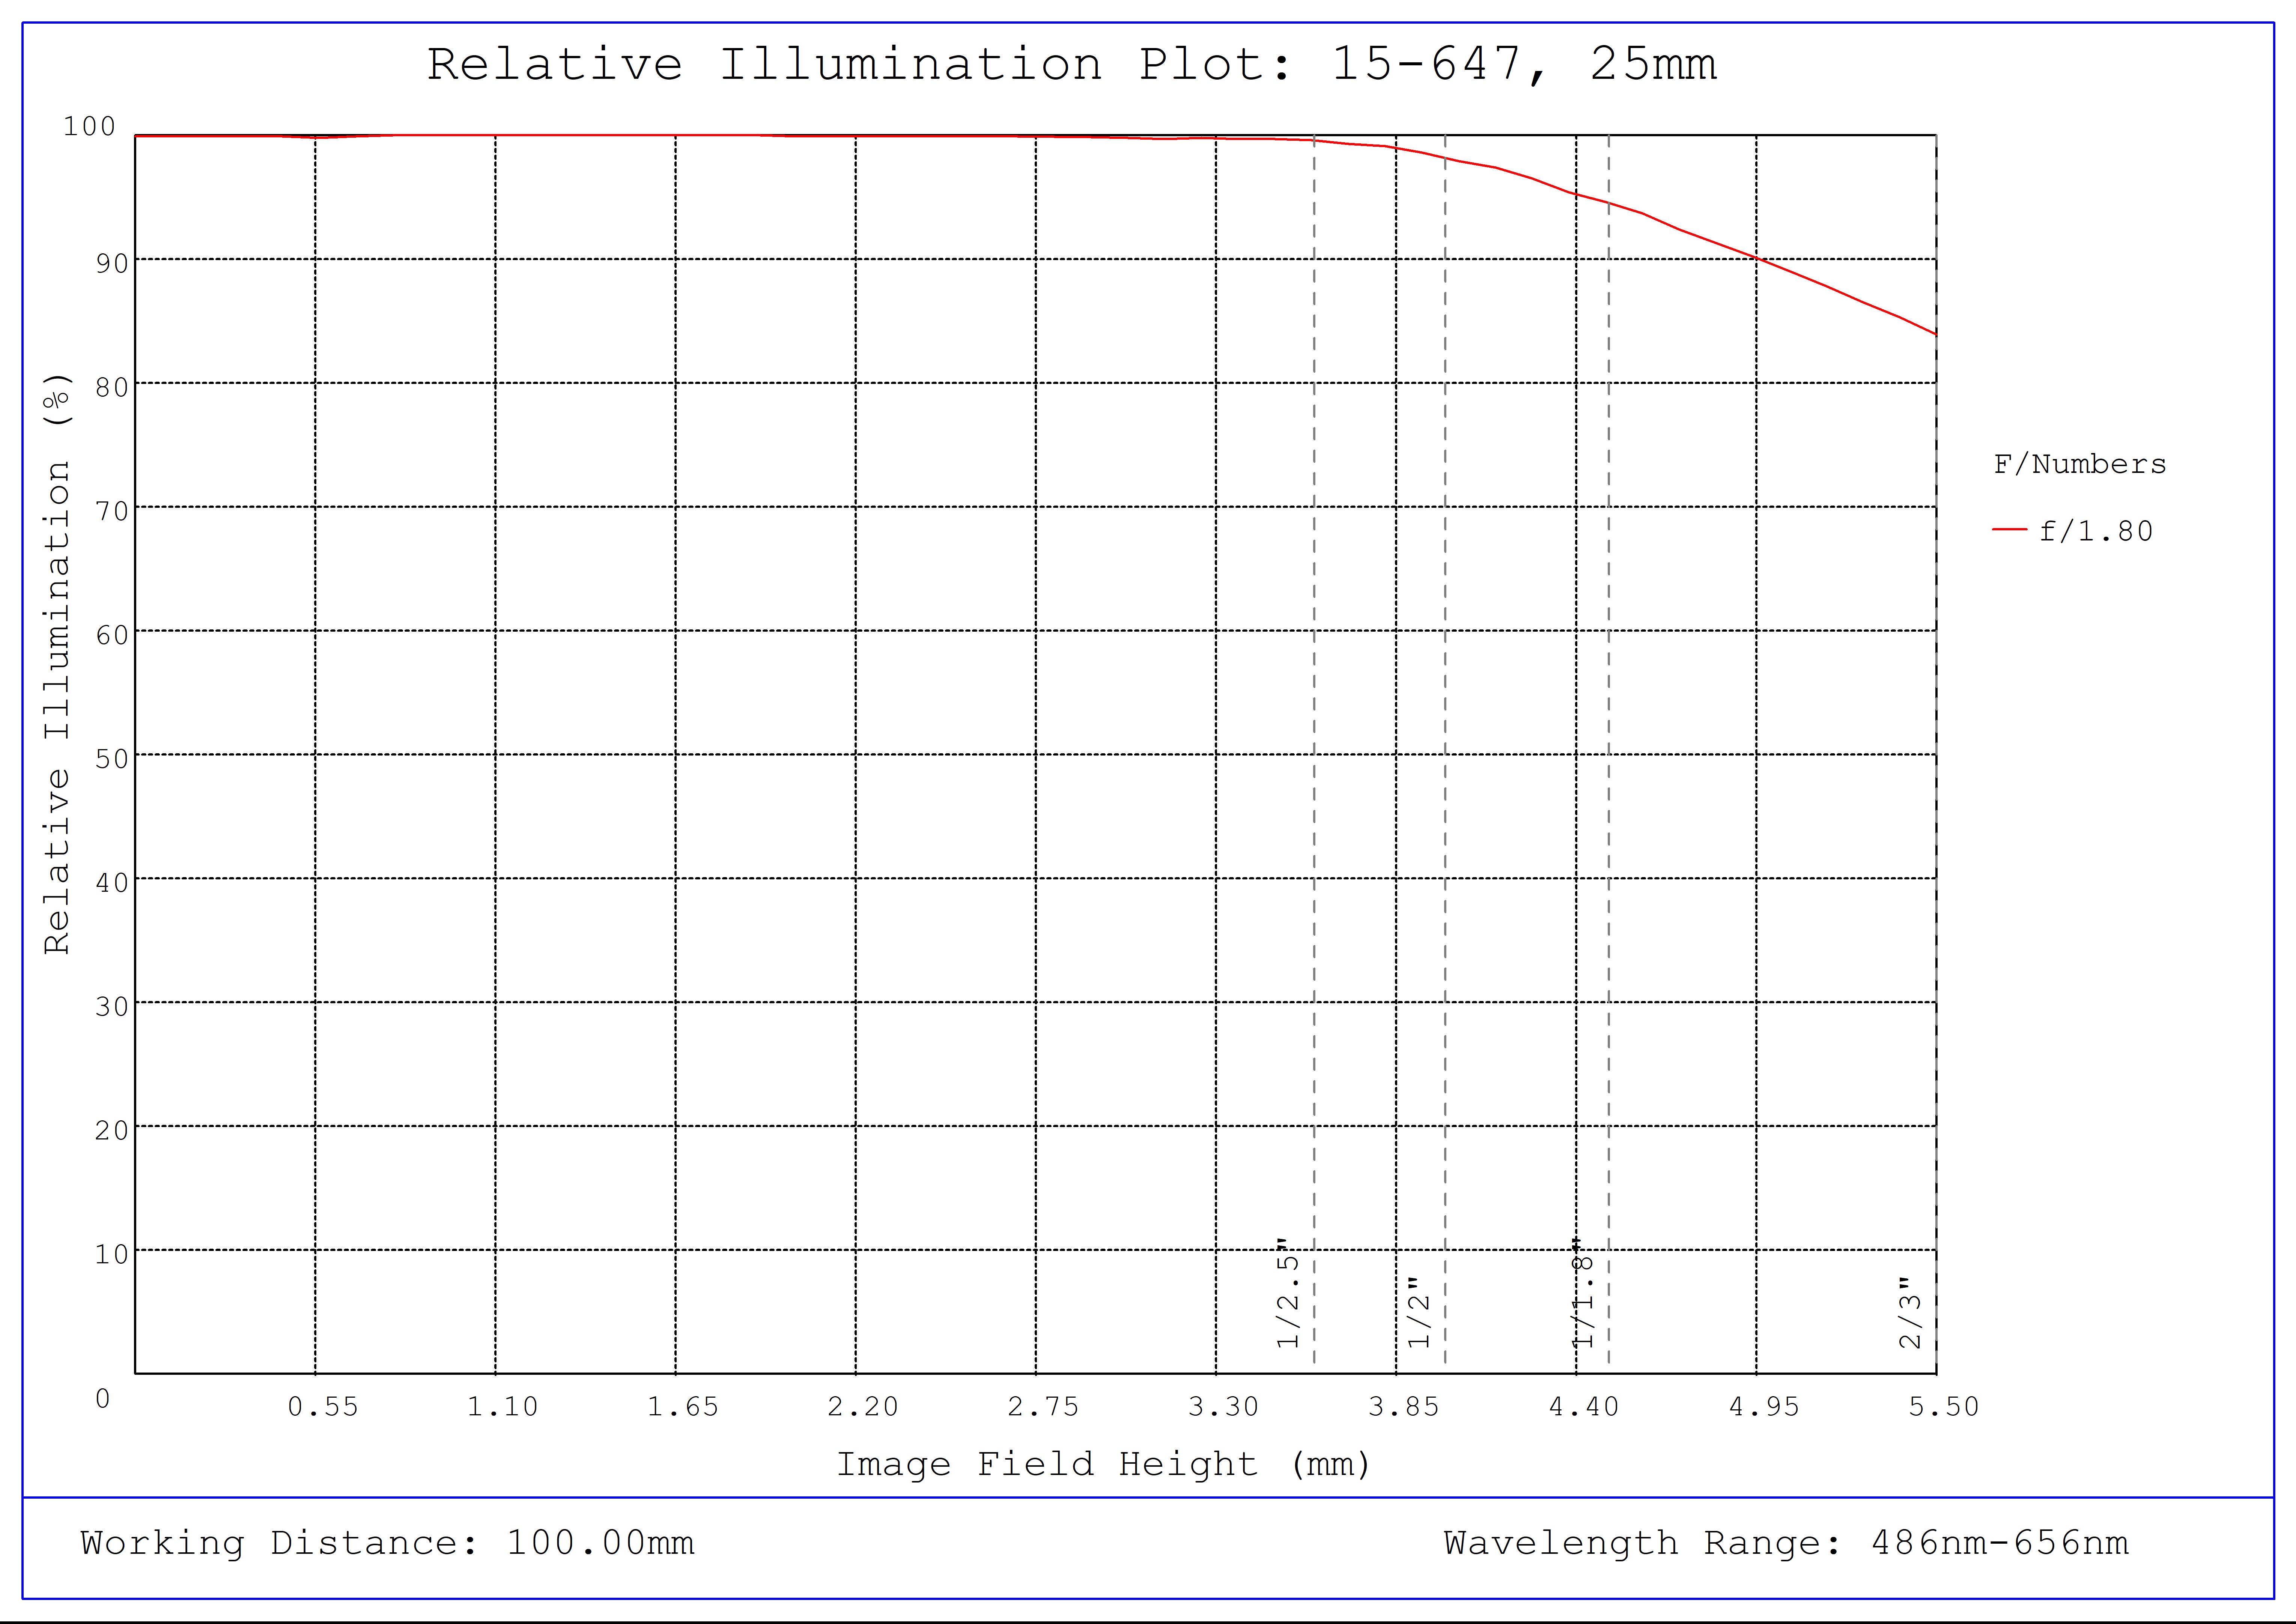 #15-647, 25mm, f/1.8 Cw Series Fixed Focal Length Lens, Relative Illumination Plot